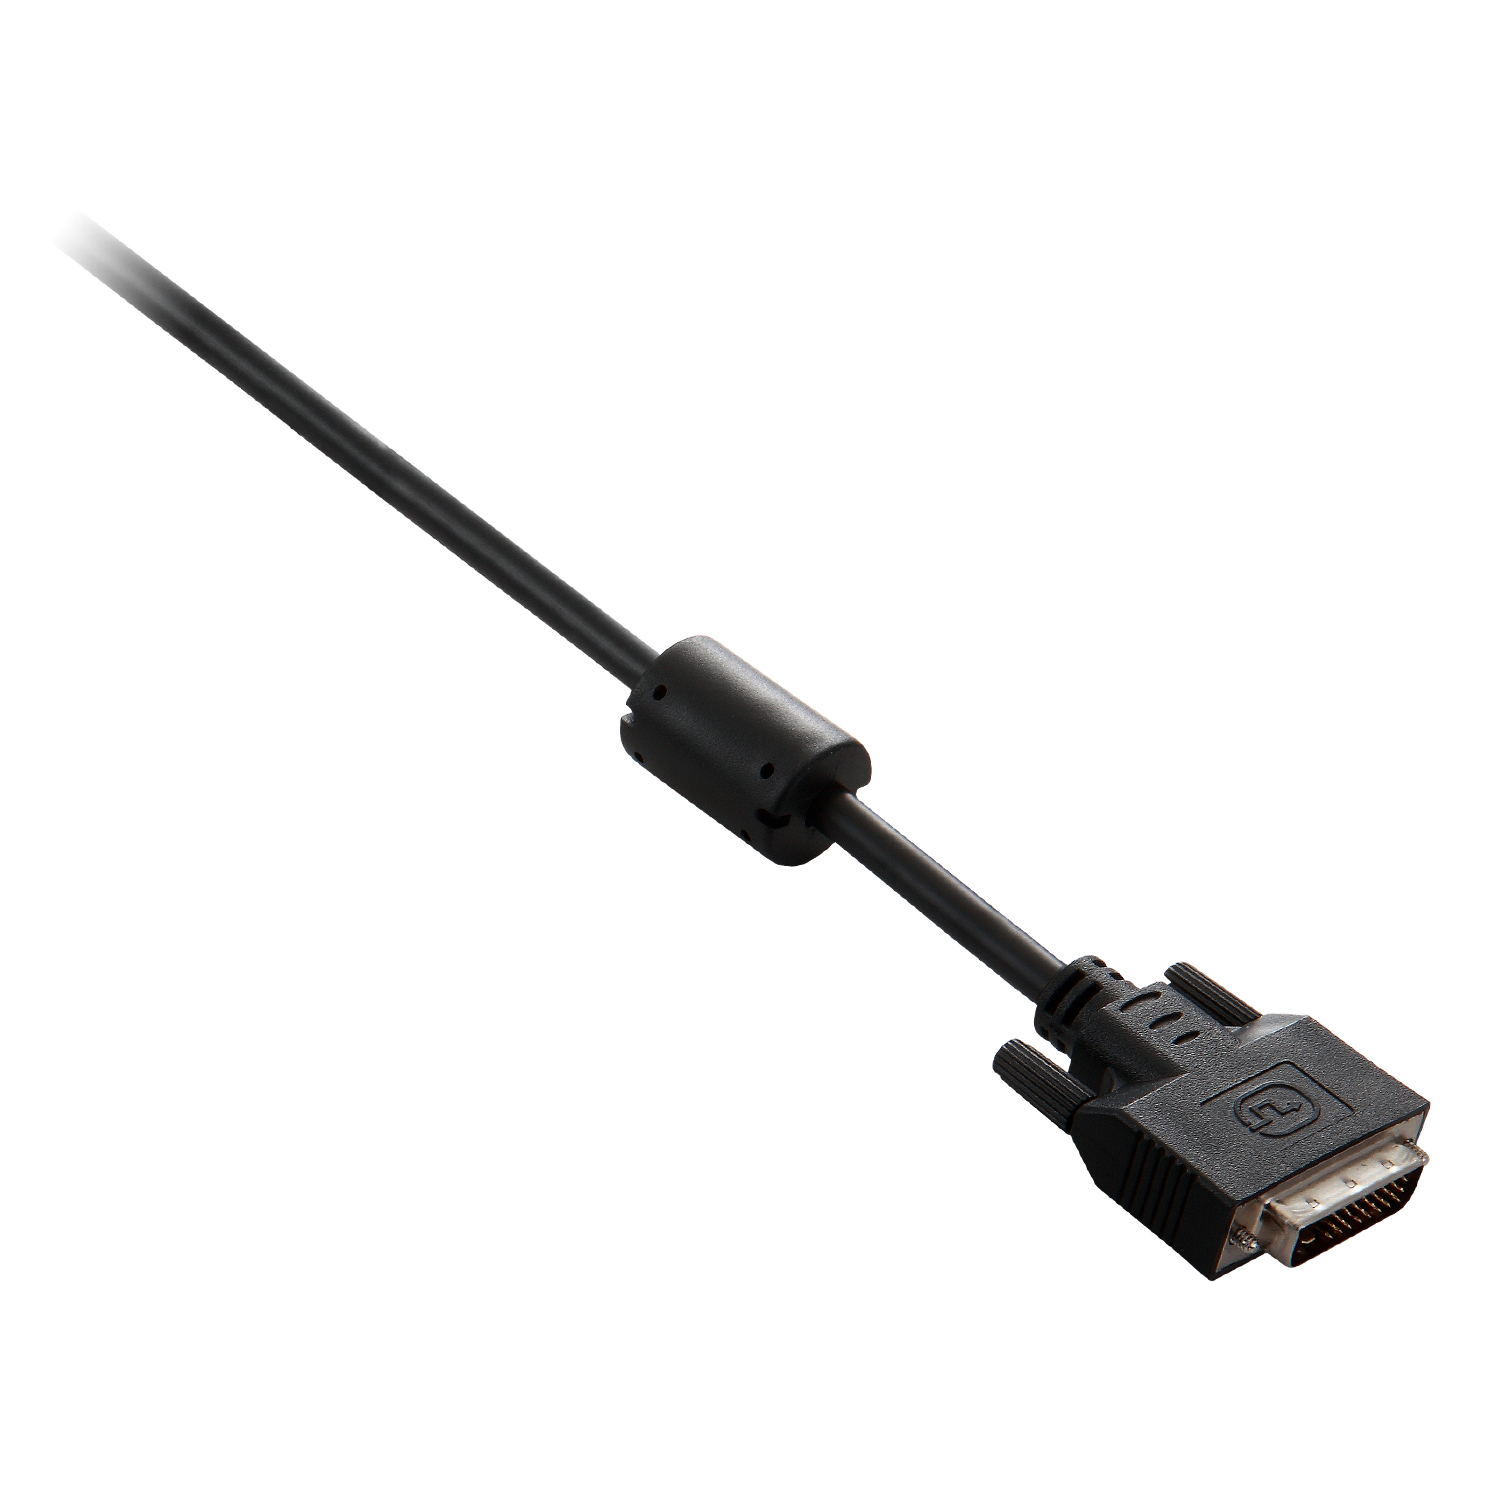 Photos - Cable (video, audio, USB) V7 Black Video Cable DVI-D Male to DVI-D Male 3m 10ft V7E2DVI-03M-BLK 